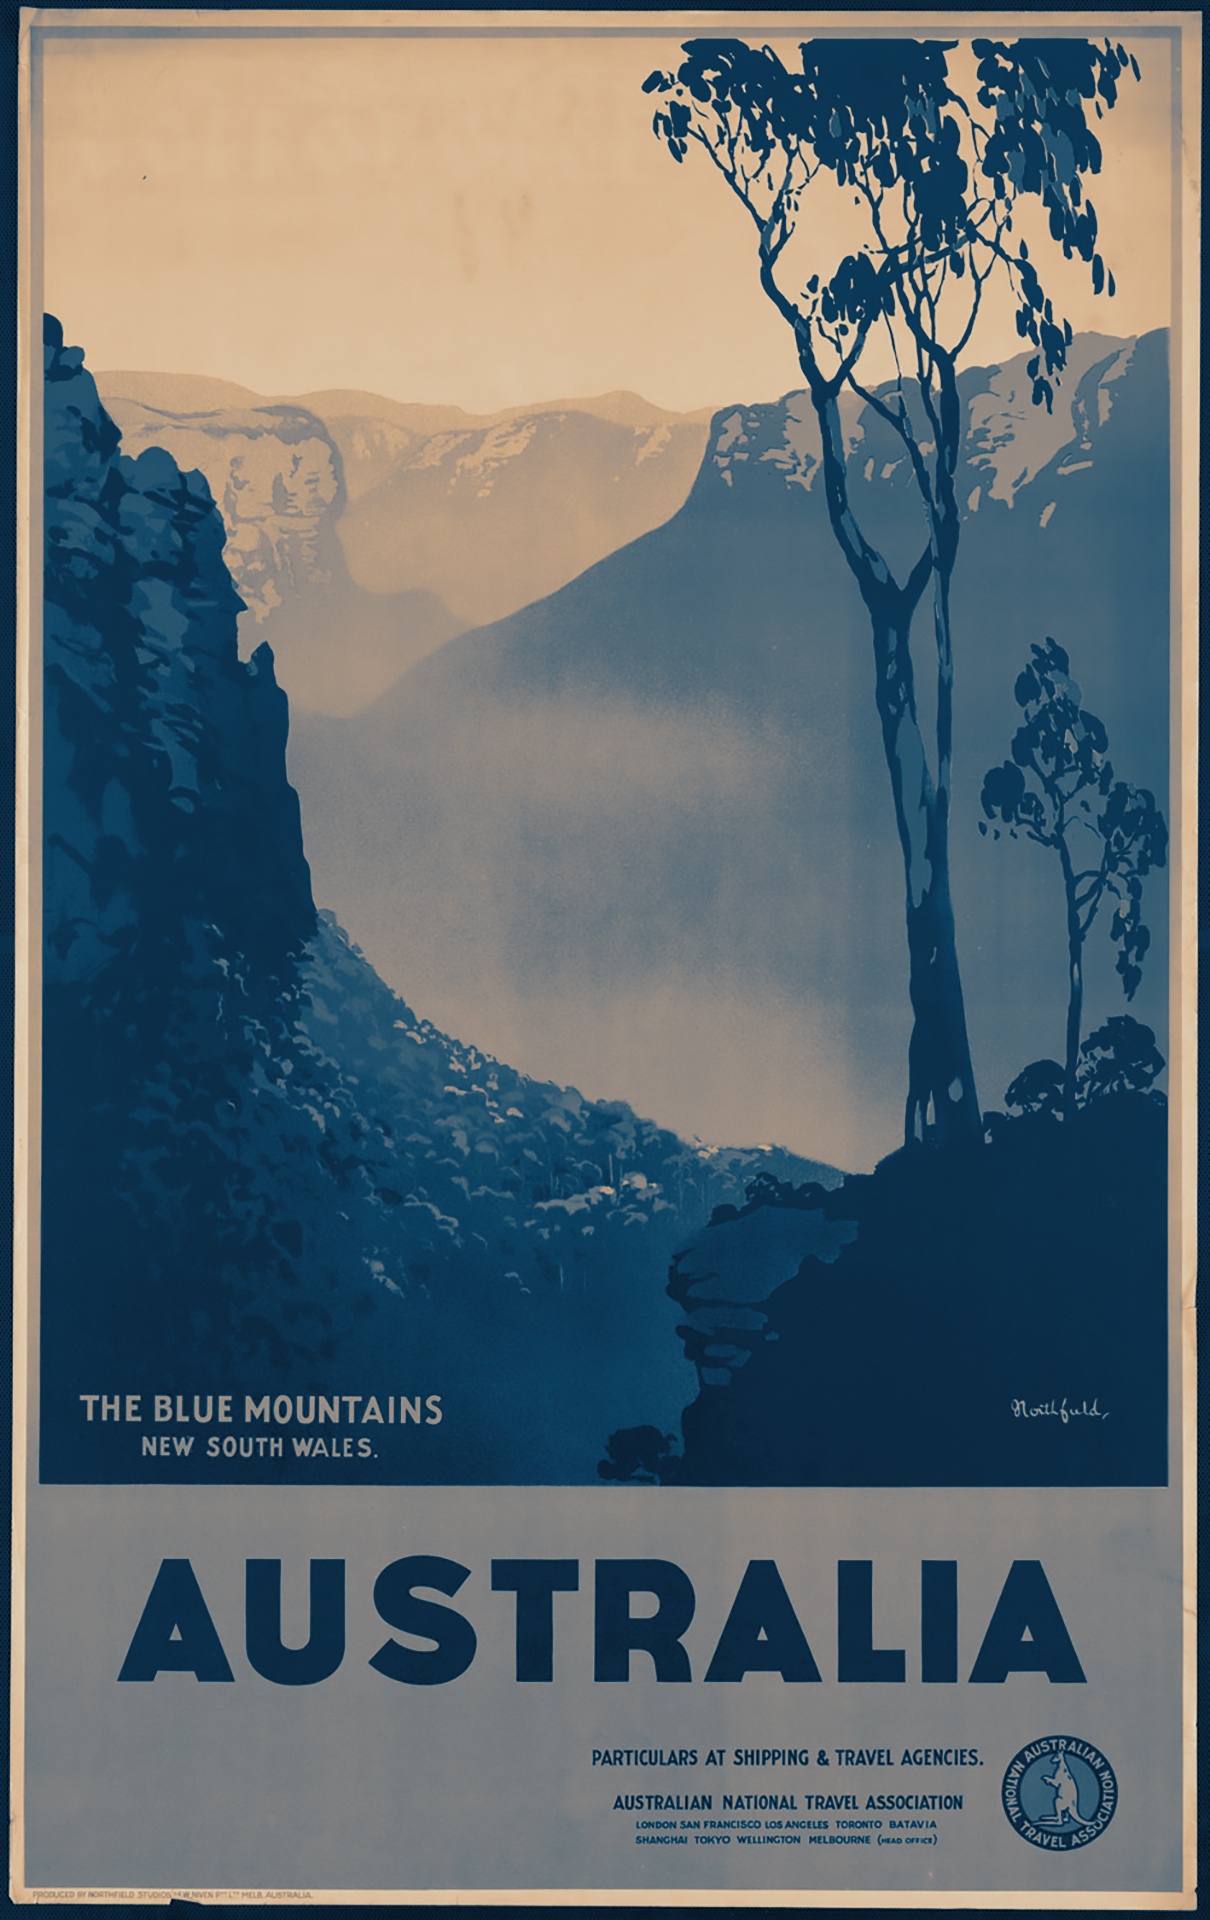 Australia Travel Poster